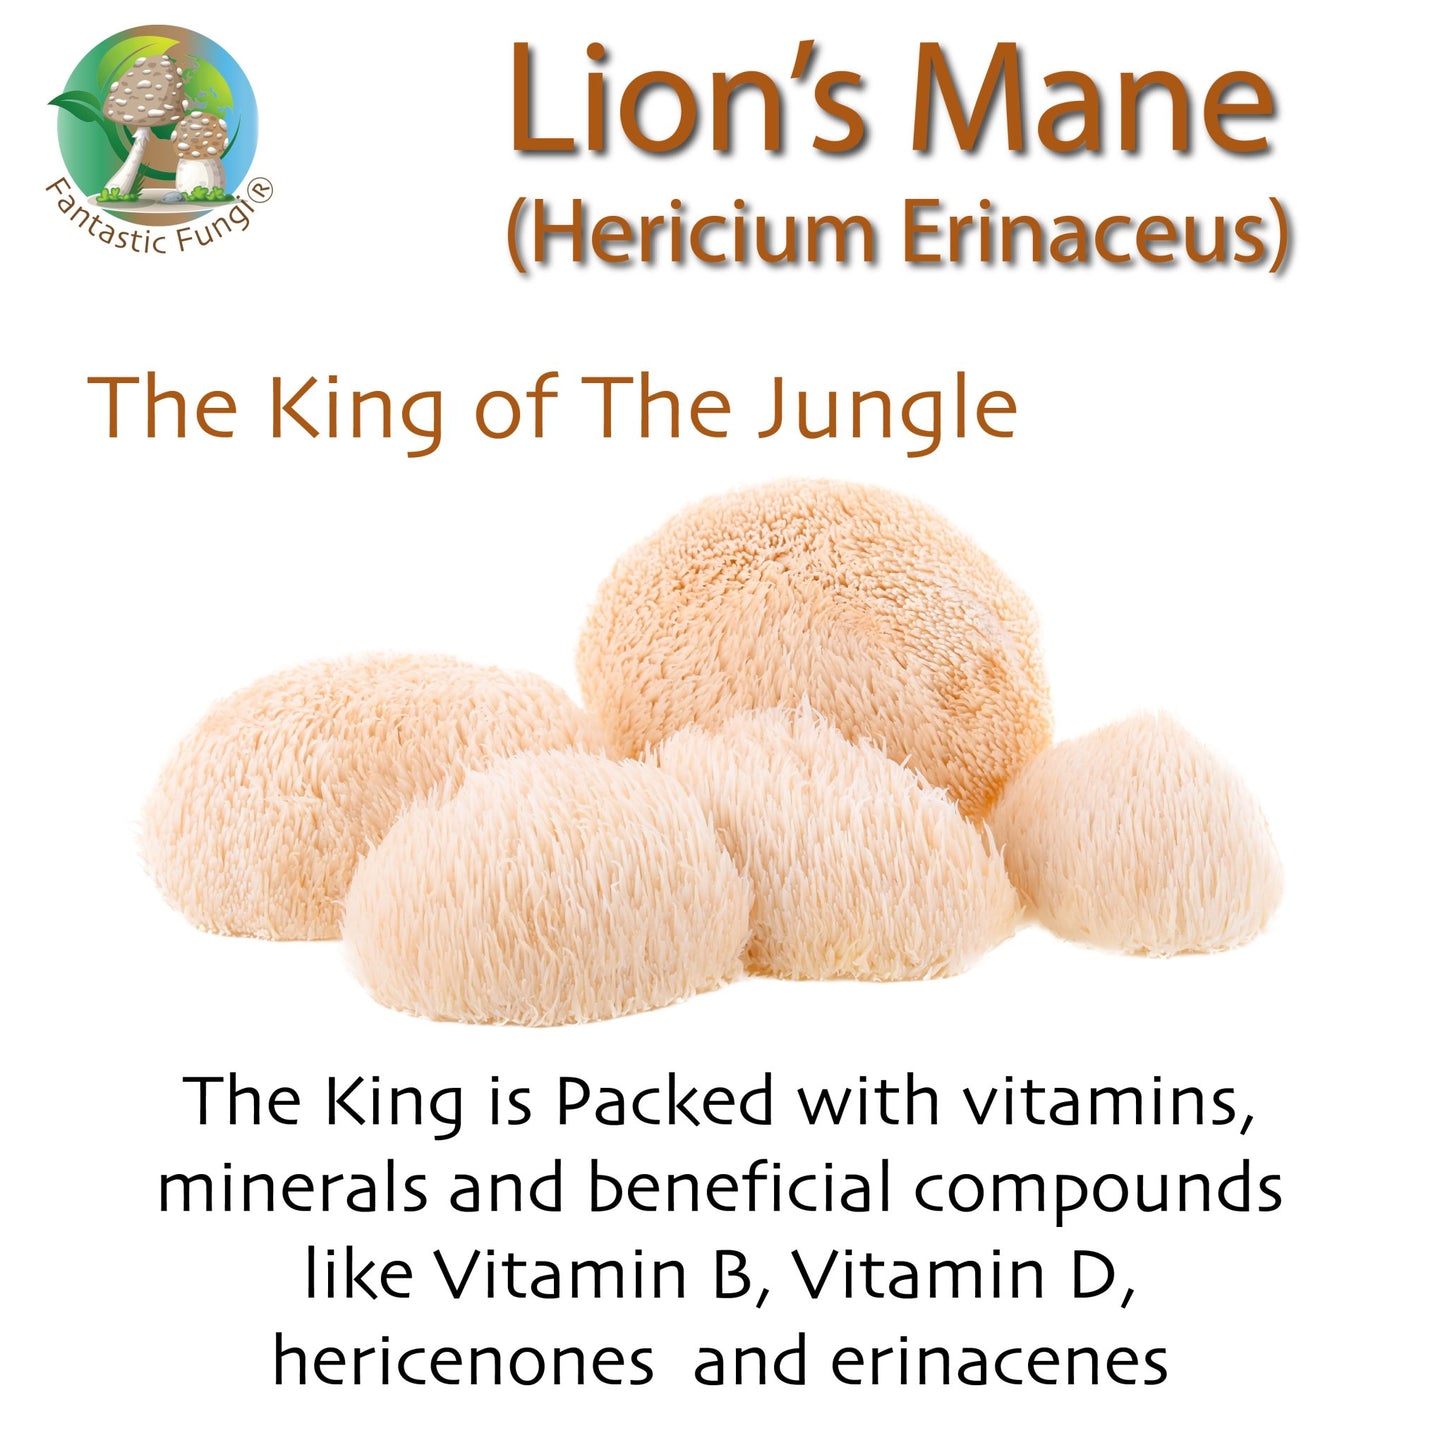 Ecogenya Continental Lion's Mane (hericium erinaceus) Mushroom Extract Powder - | Highly Concentrated - Ecogenya